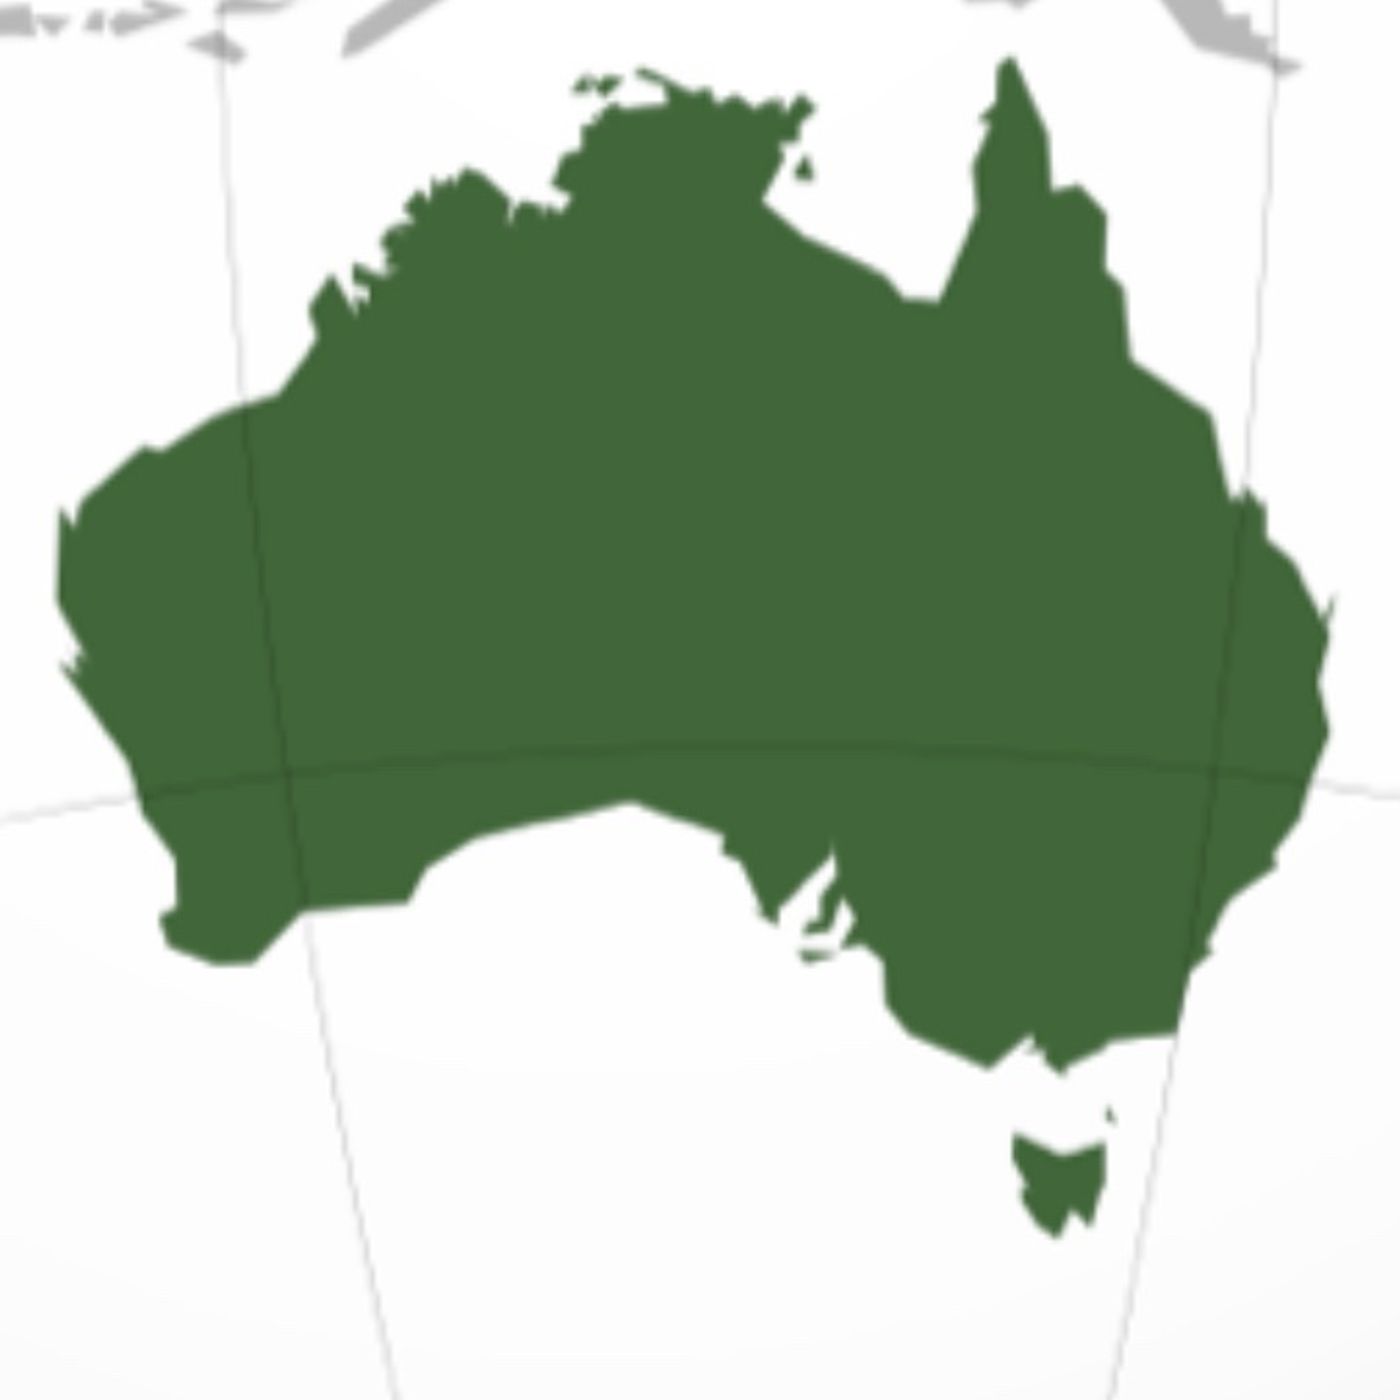 1667: Australia fires - January 2020